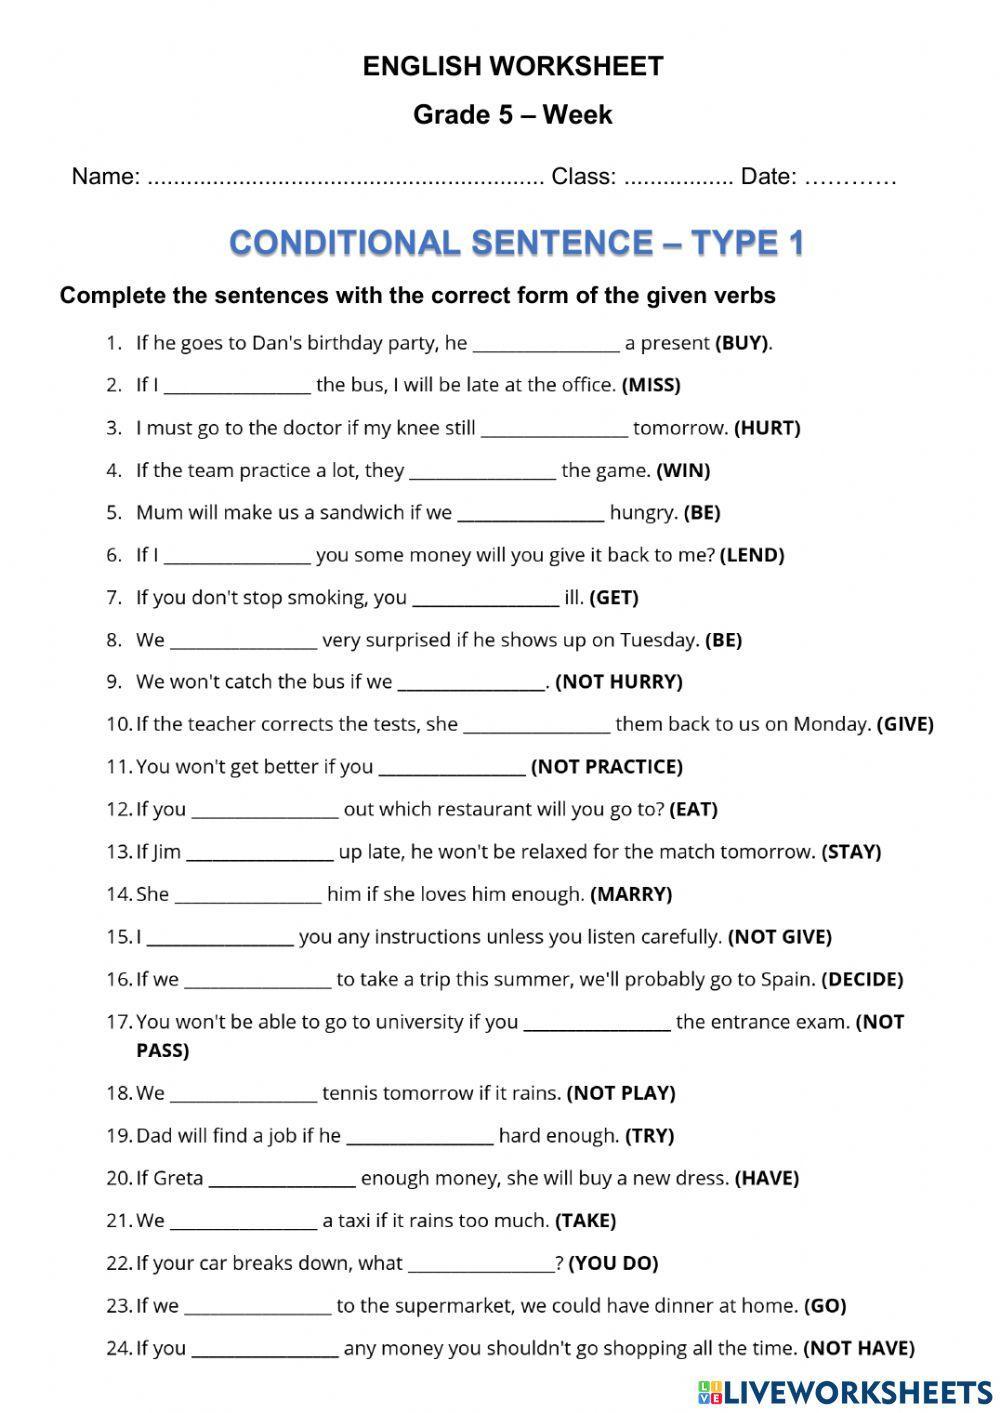 Condition sentences interactive worksheet